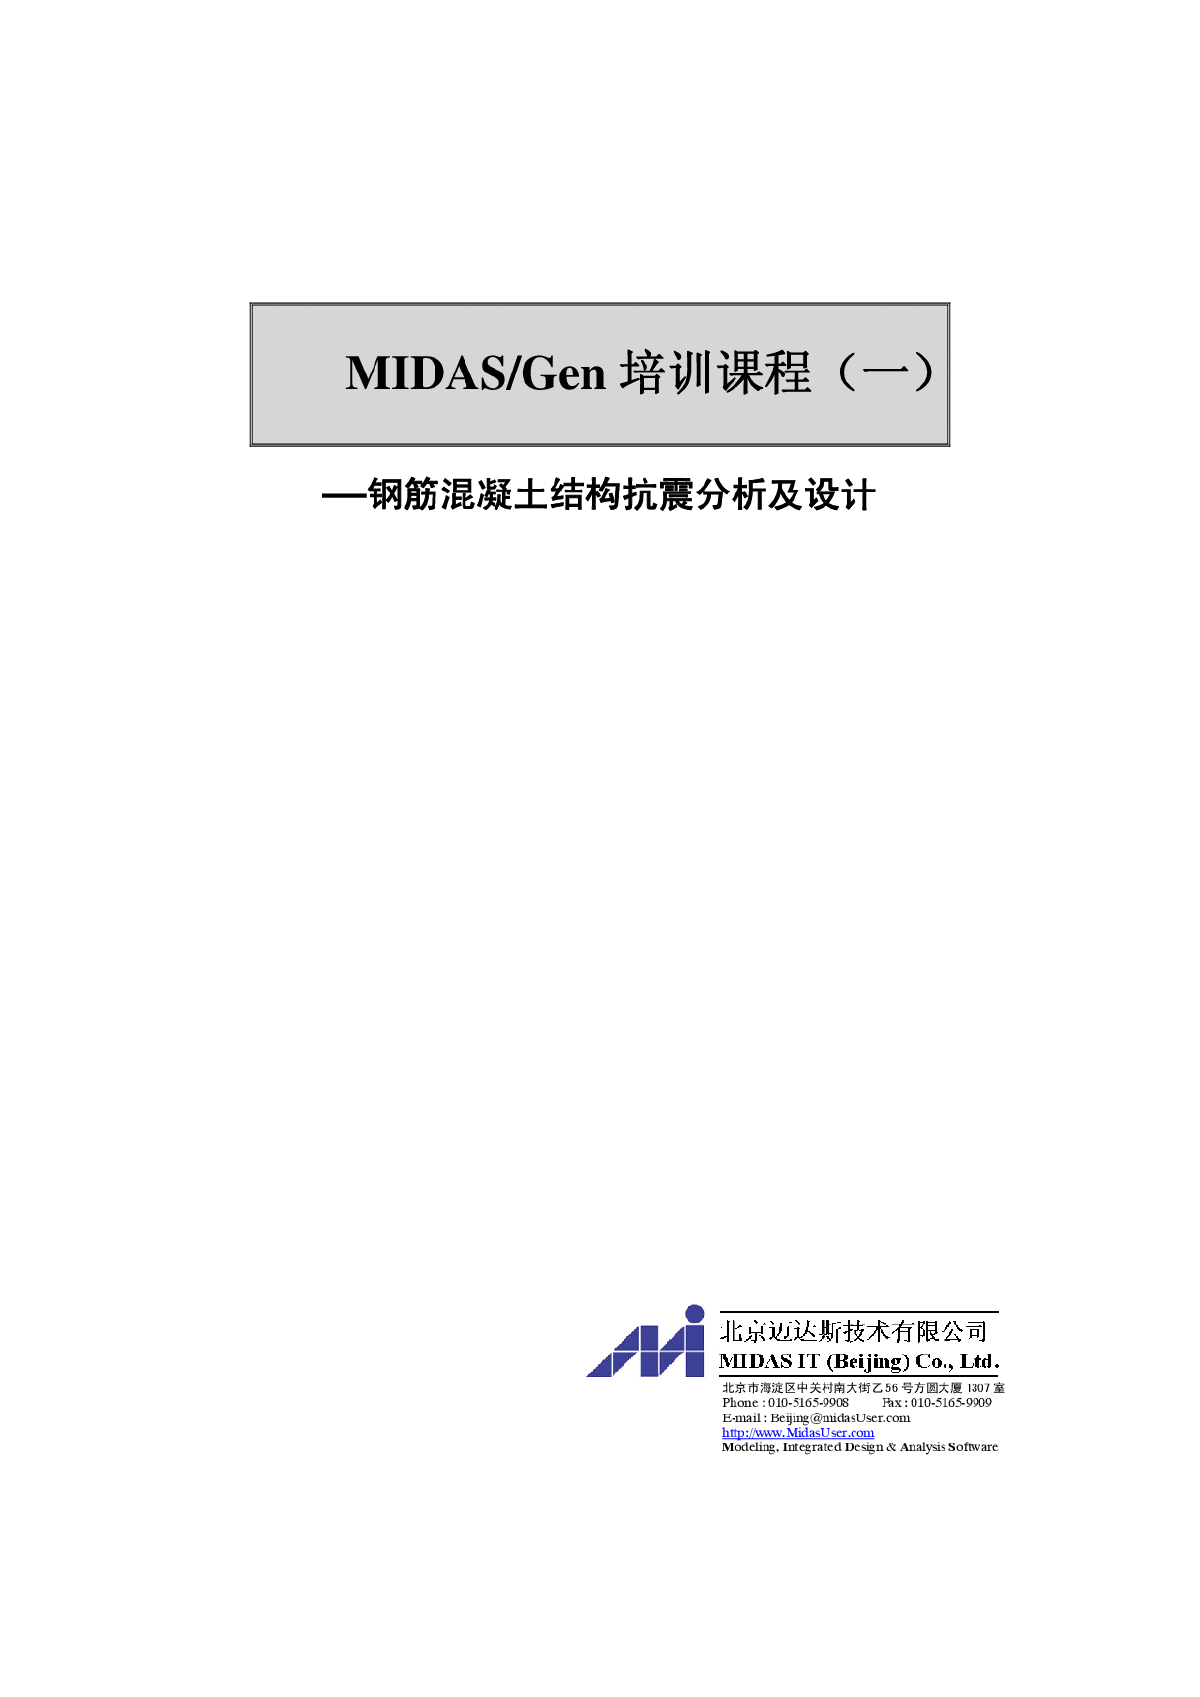 MIDAS Gen用户培训手册一 钢筋混凝土结构-图一